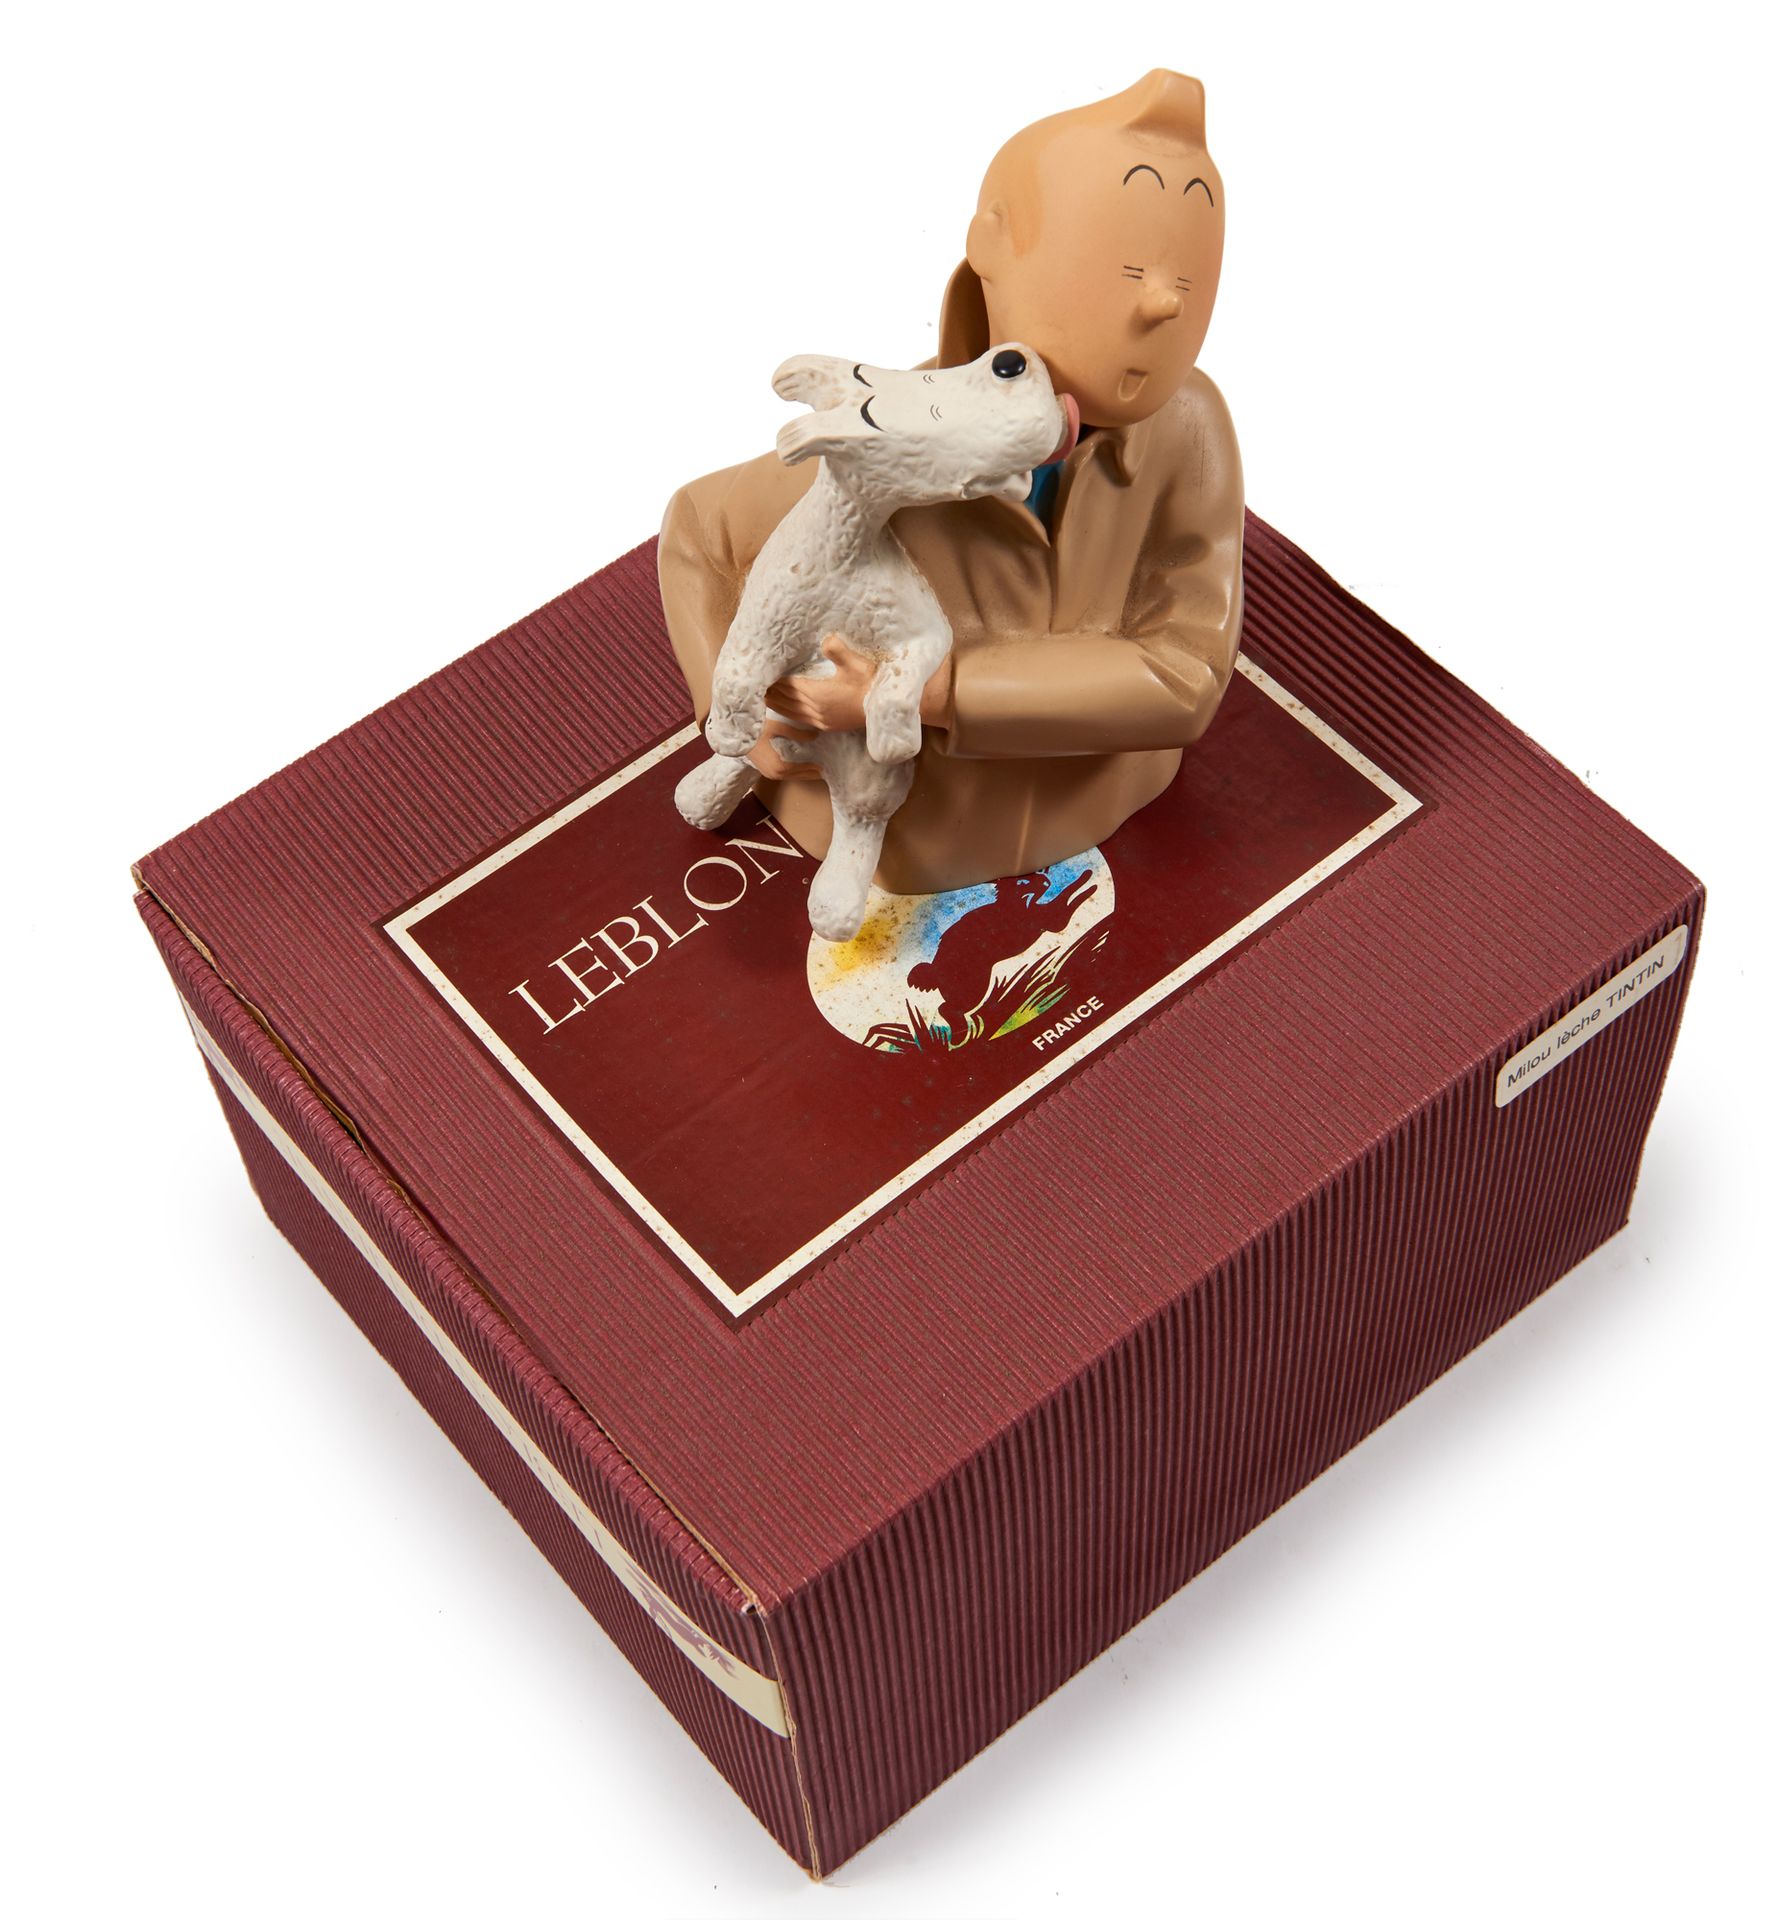 Leblon-Delienne - Snowy licking Tintin : Figurine representing Snowy in Tintin's&hellip;